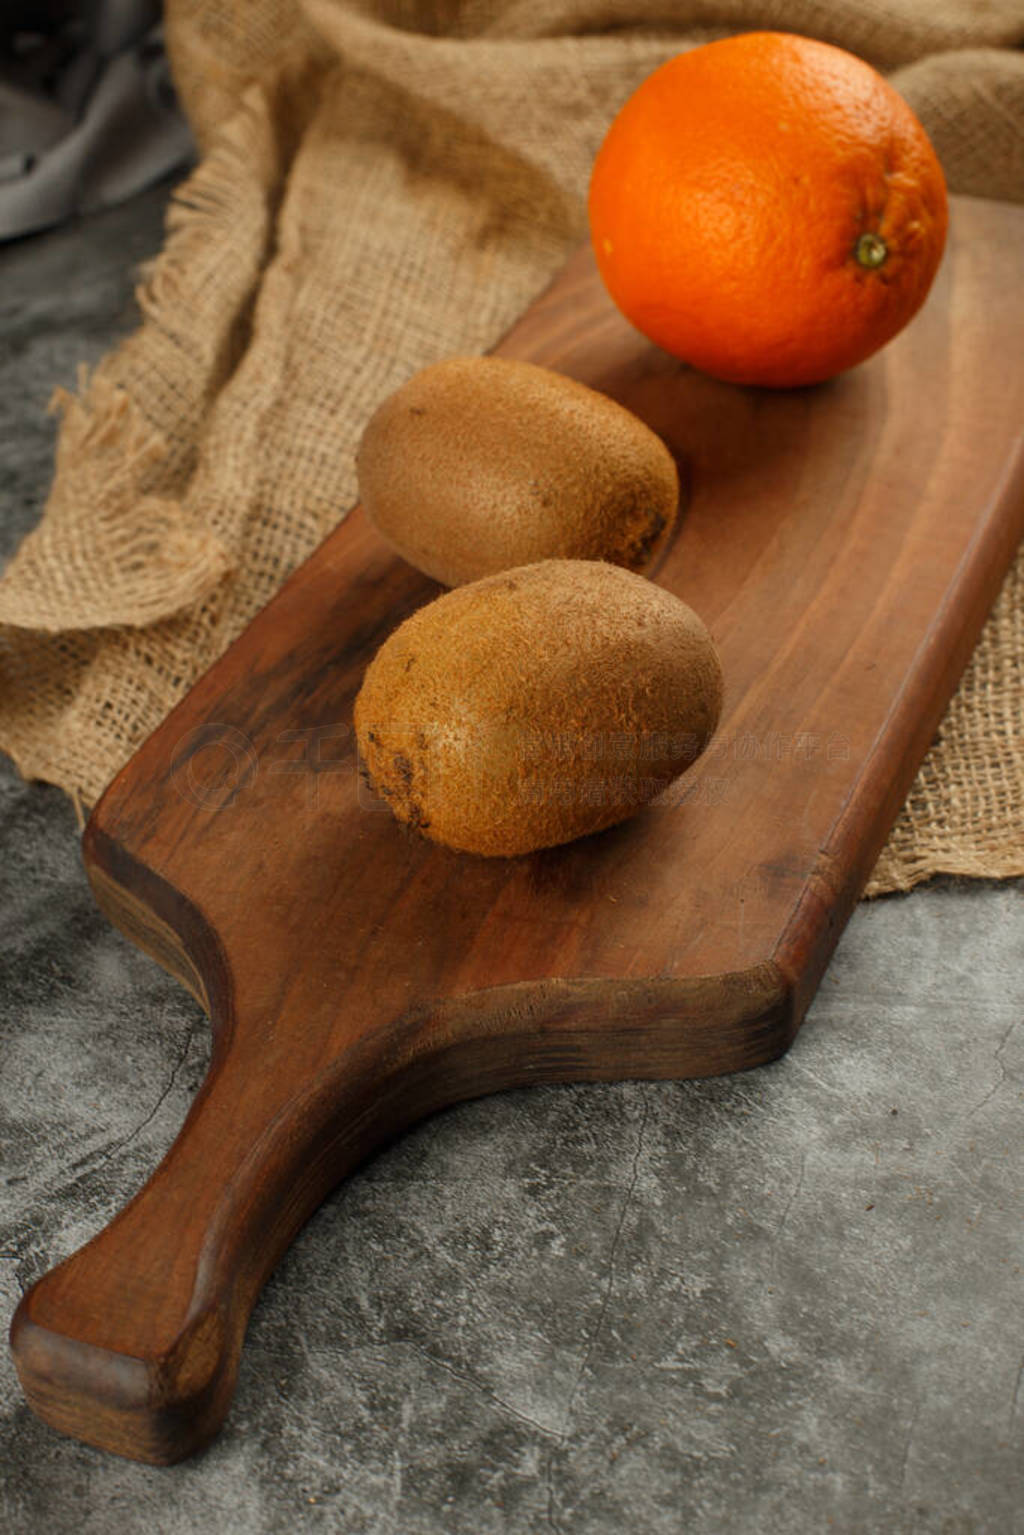 Orange and kiwies on a cutting board.